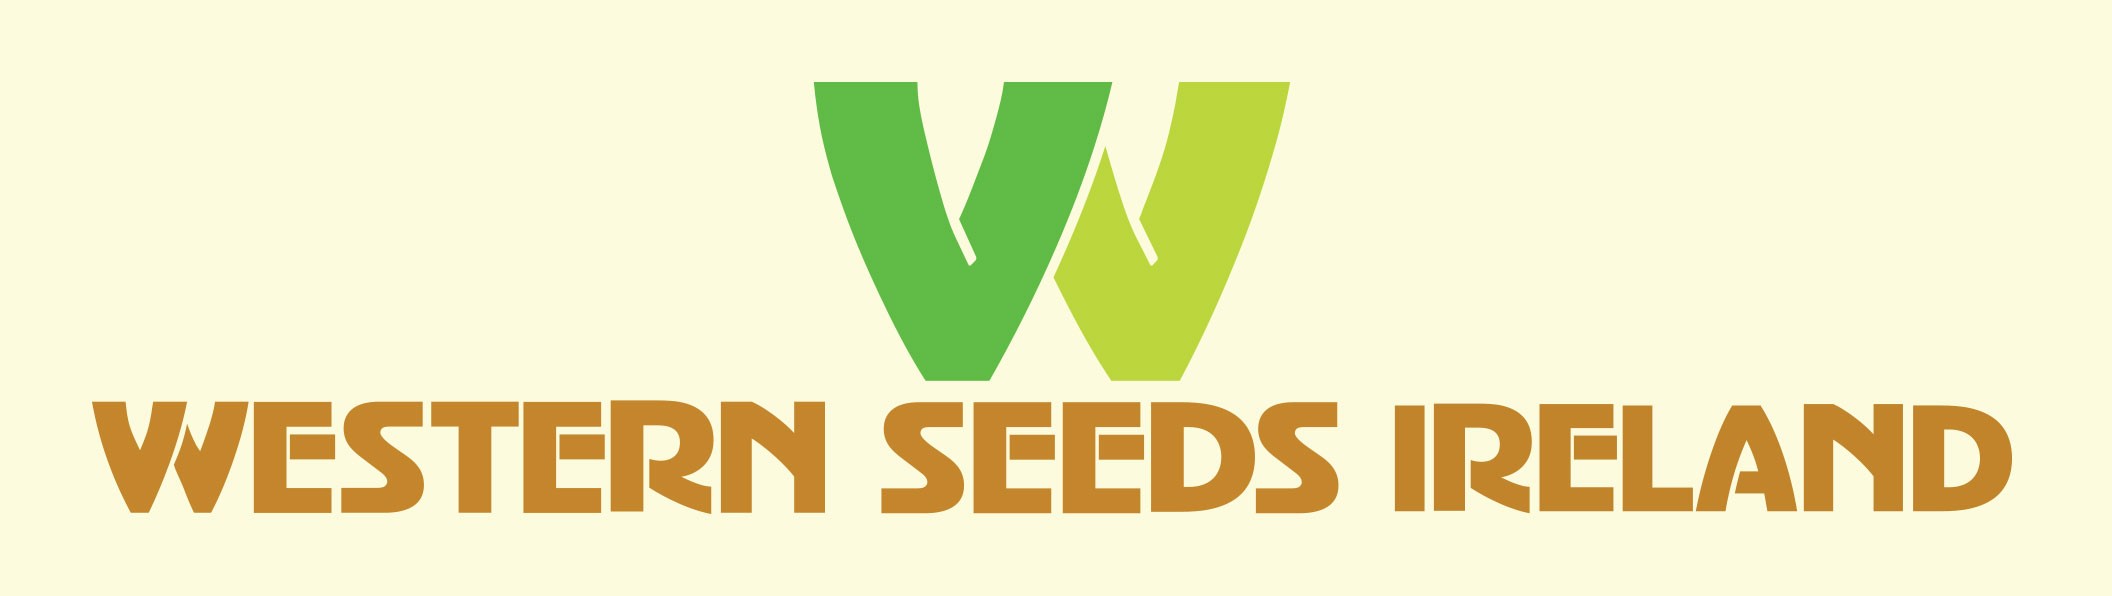 Western Seeds